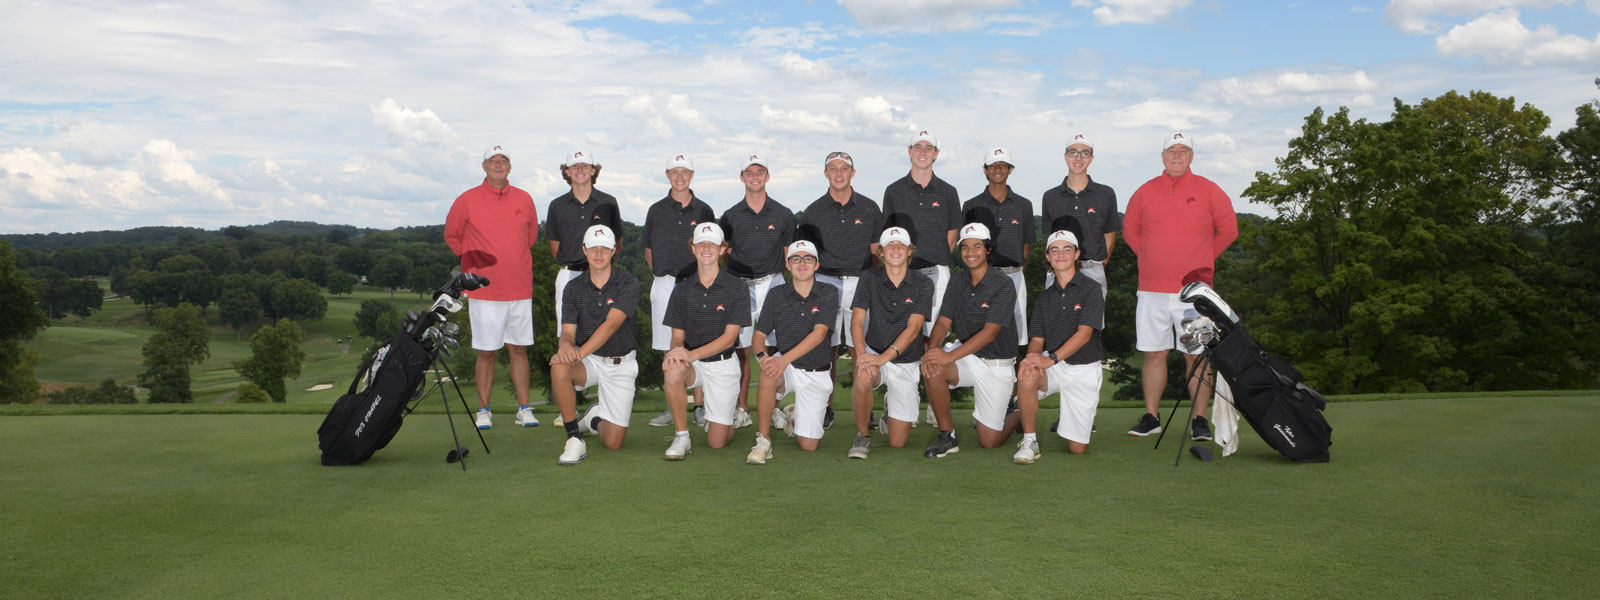 Boys' Golf Team